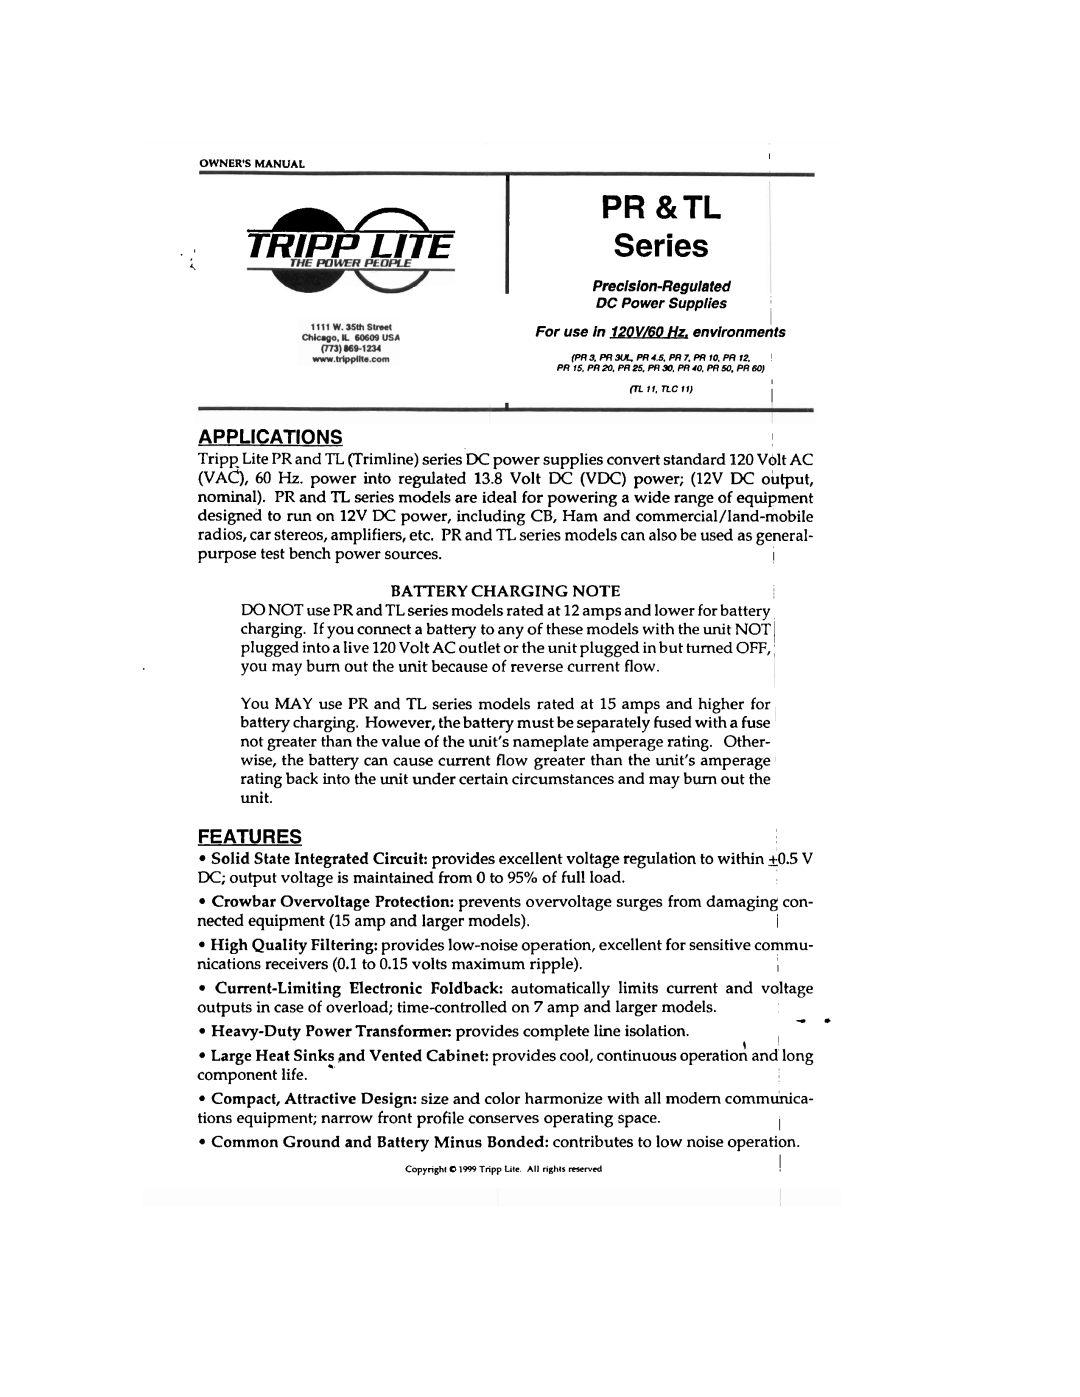 Tripp Lite PR Series, TL Series owner manual Applications, Features, Tripp Lite, Pr &Tl 